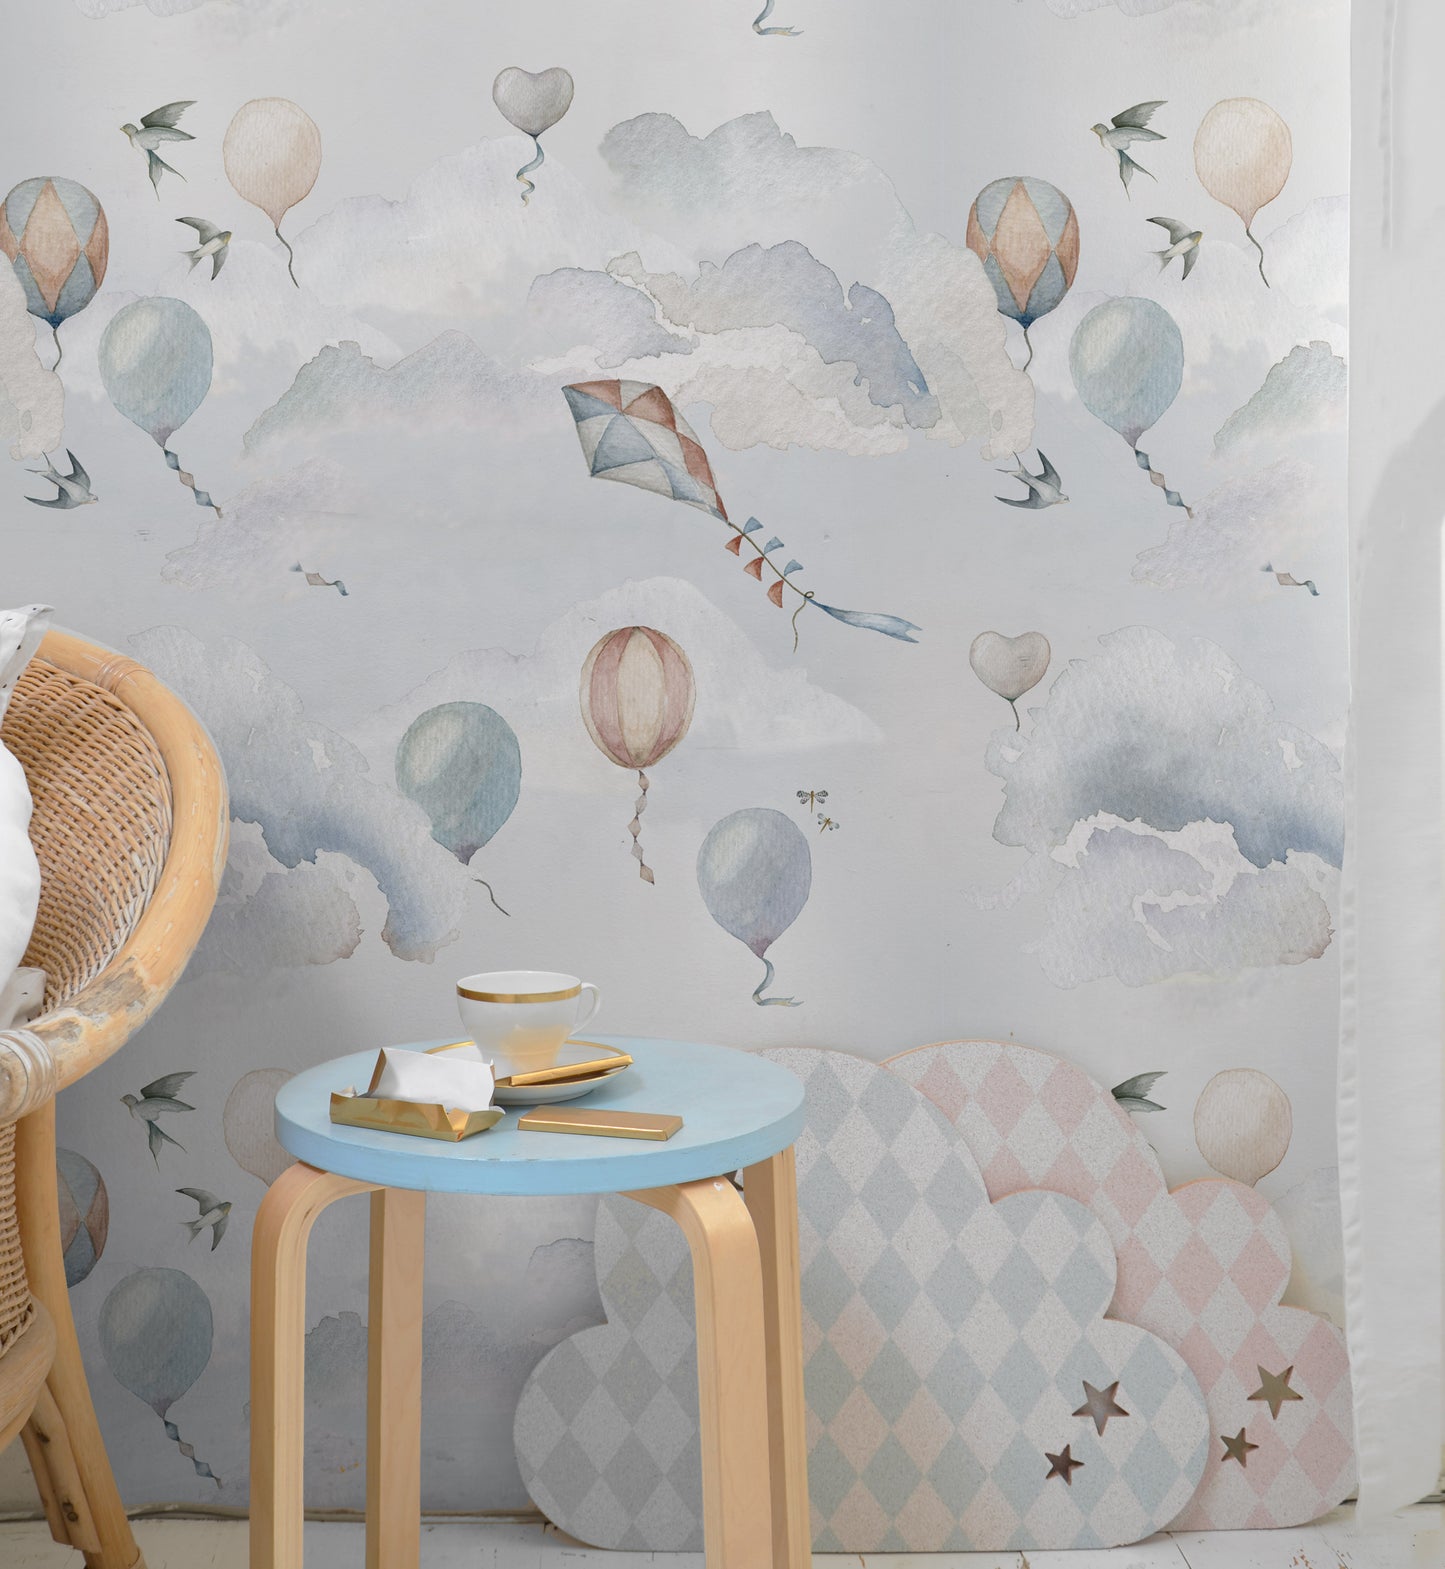 Dekornik Balloons Fairytale Wallpaper